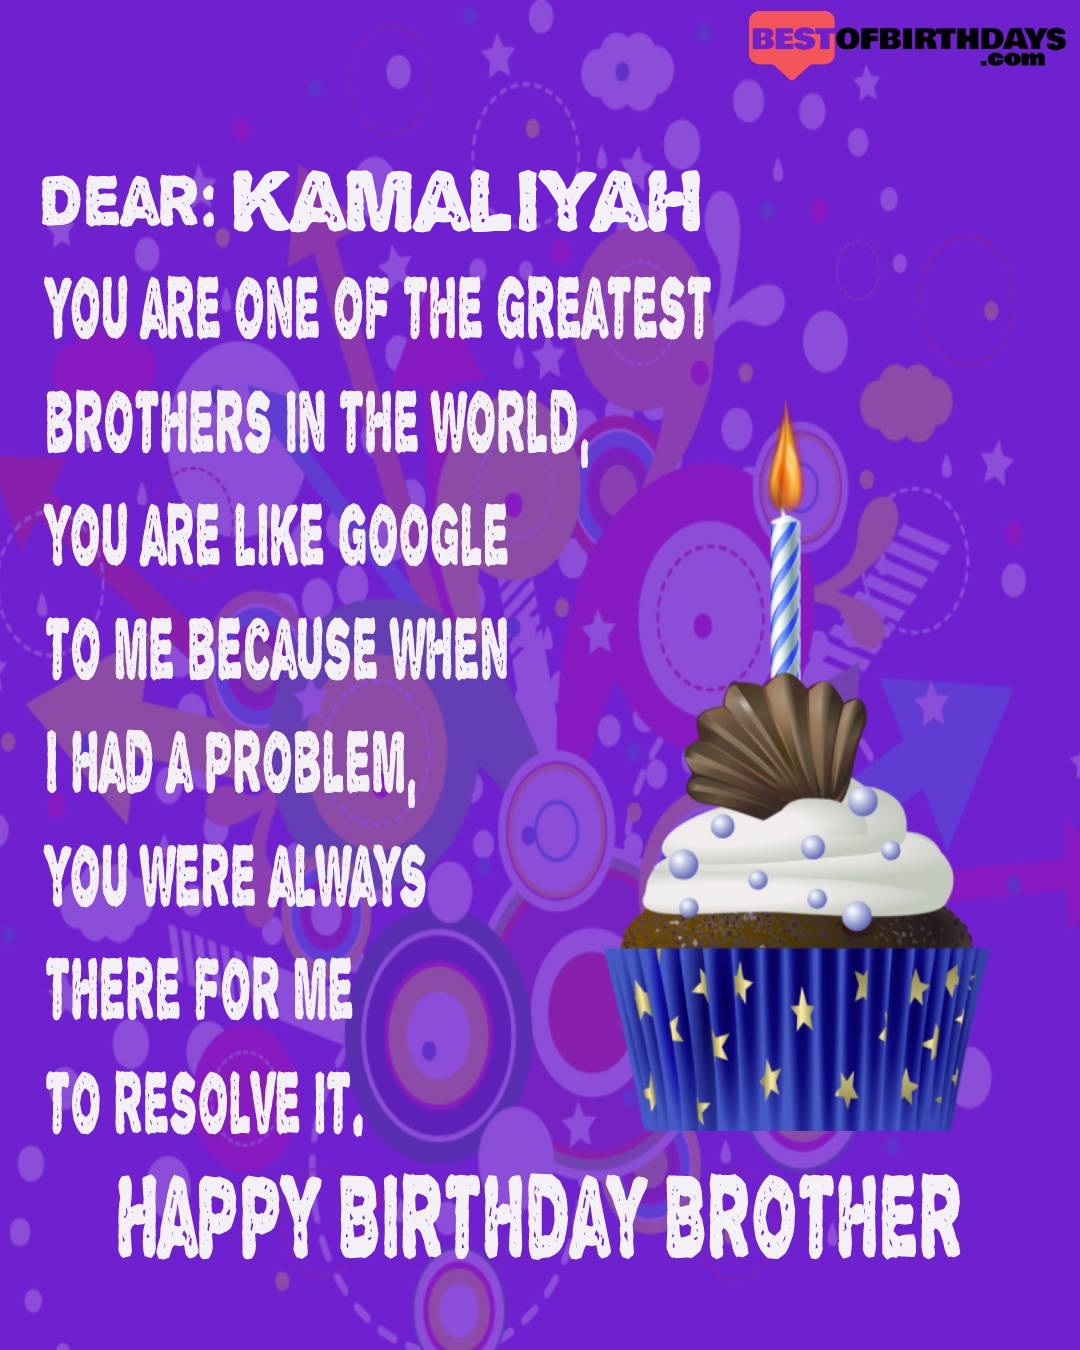 Happy birthday kamaliyah bhai brother bro